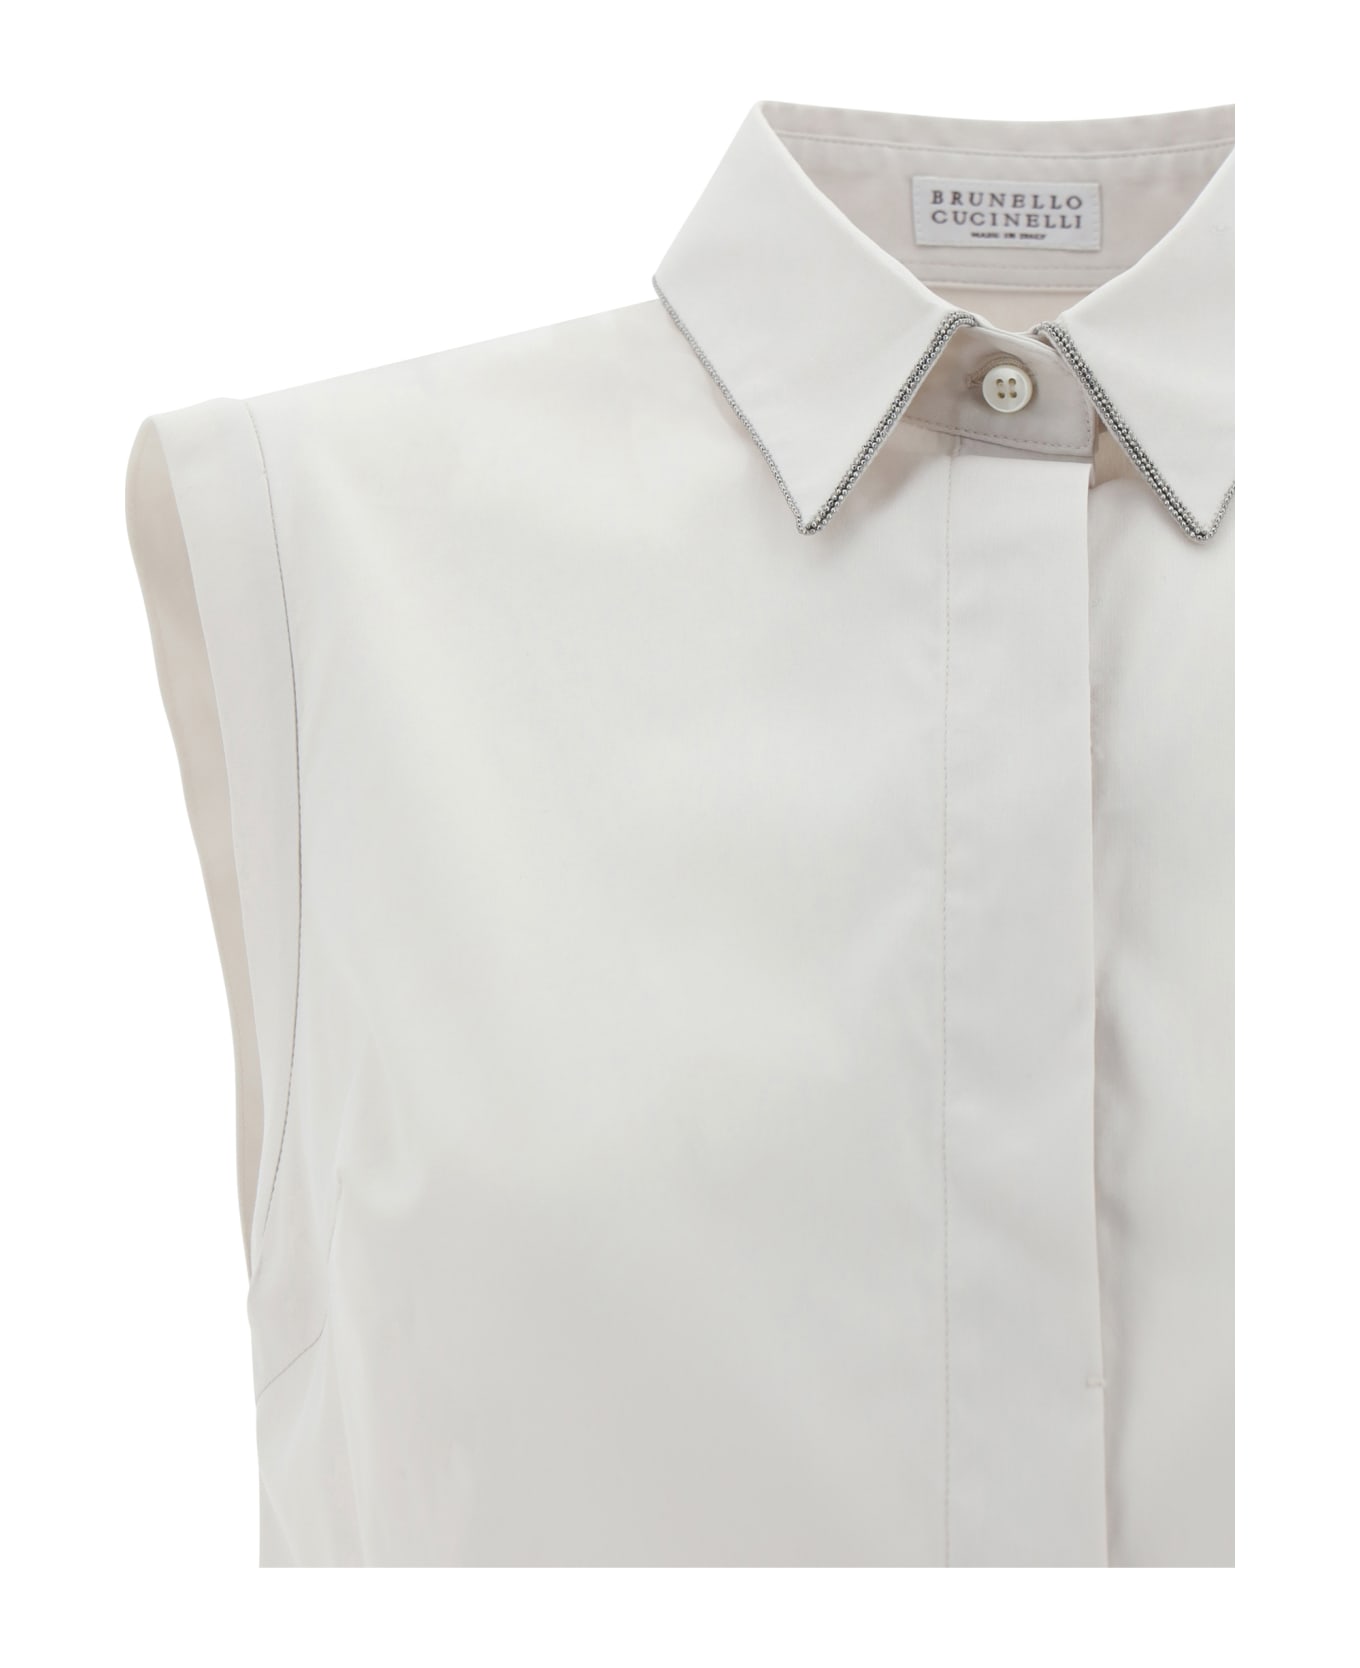 Brunello Cucinelli Sleeveless Shirt With Monili Details - White